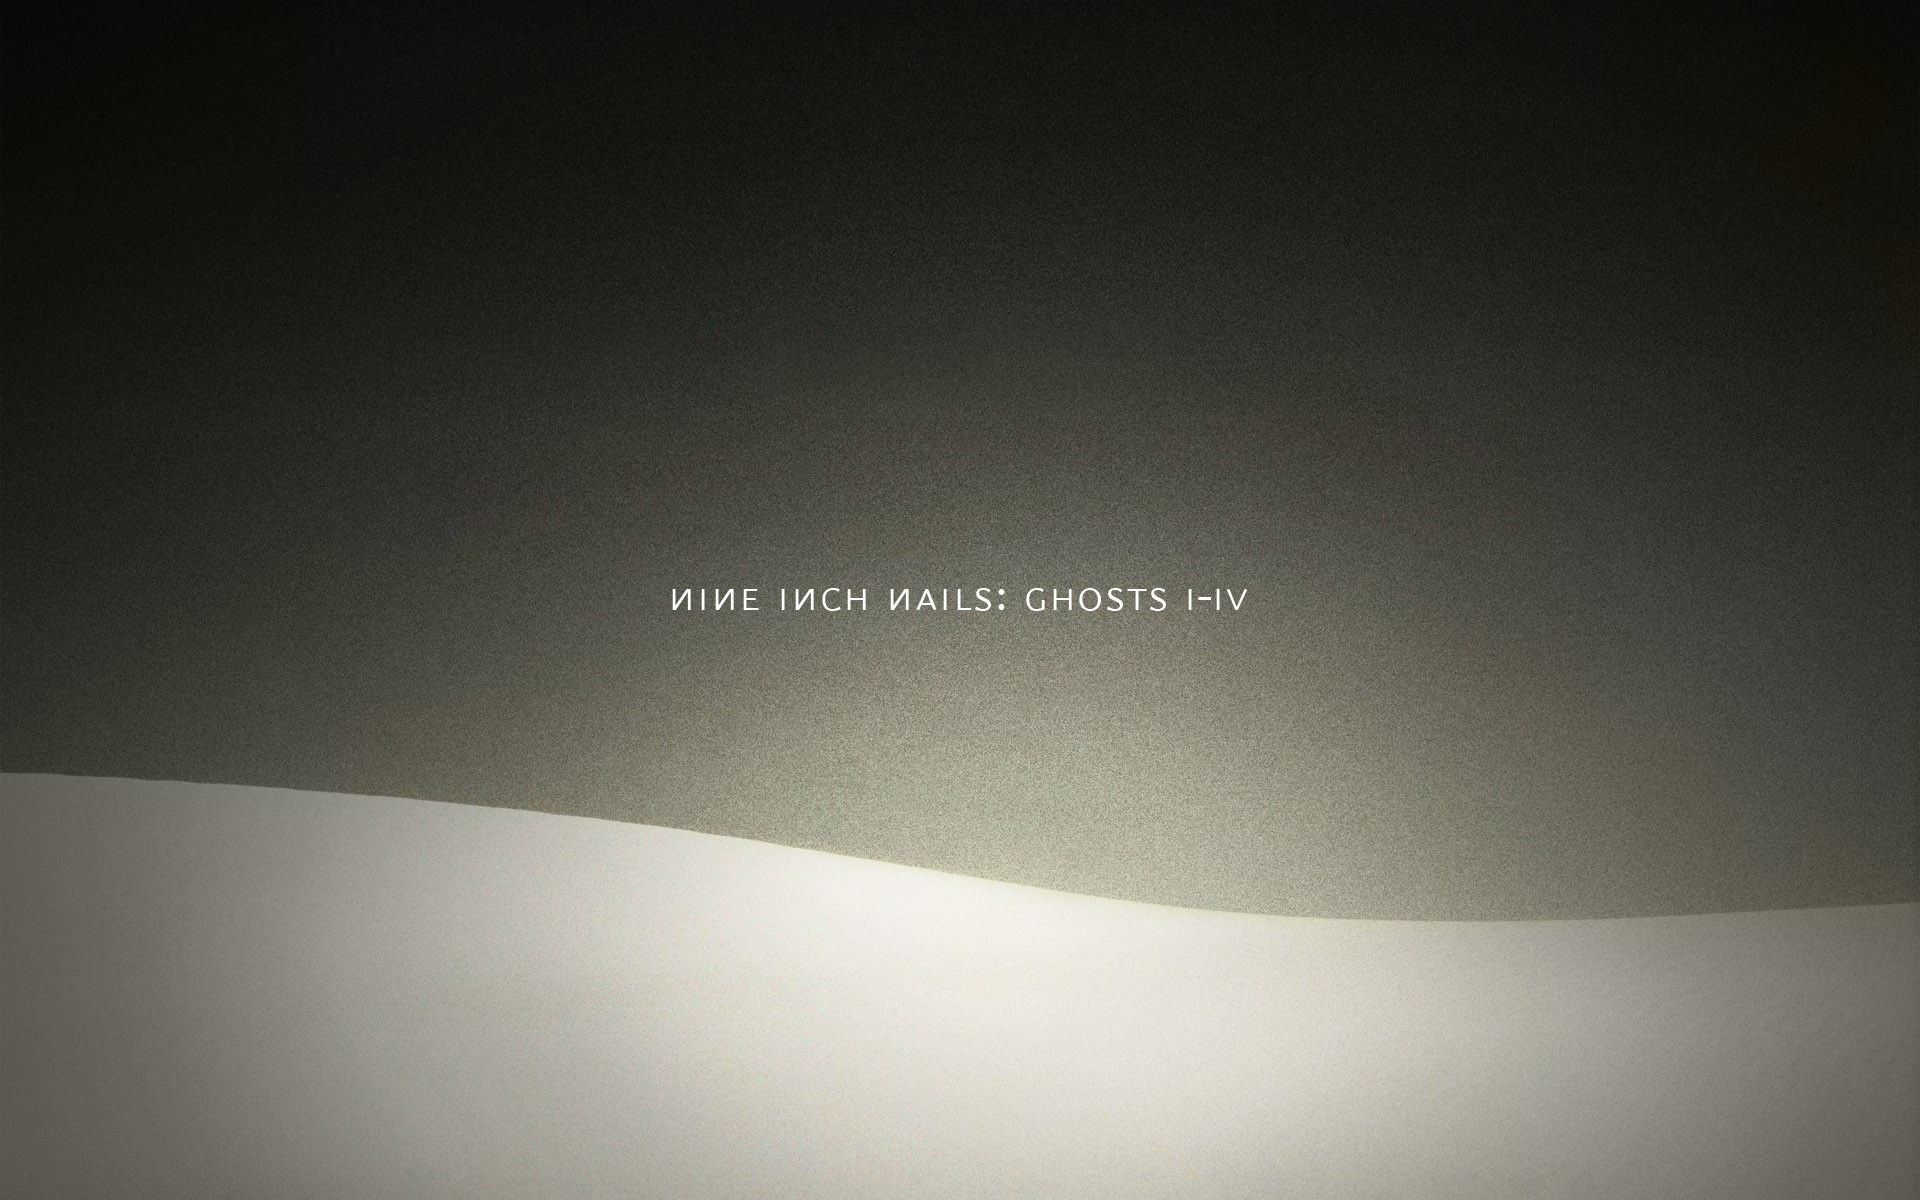 General 1920x1200 ghost Nine Inch Nails minimalism gray music